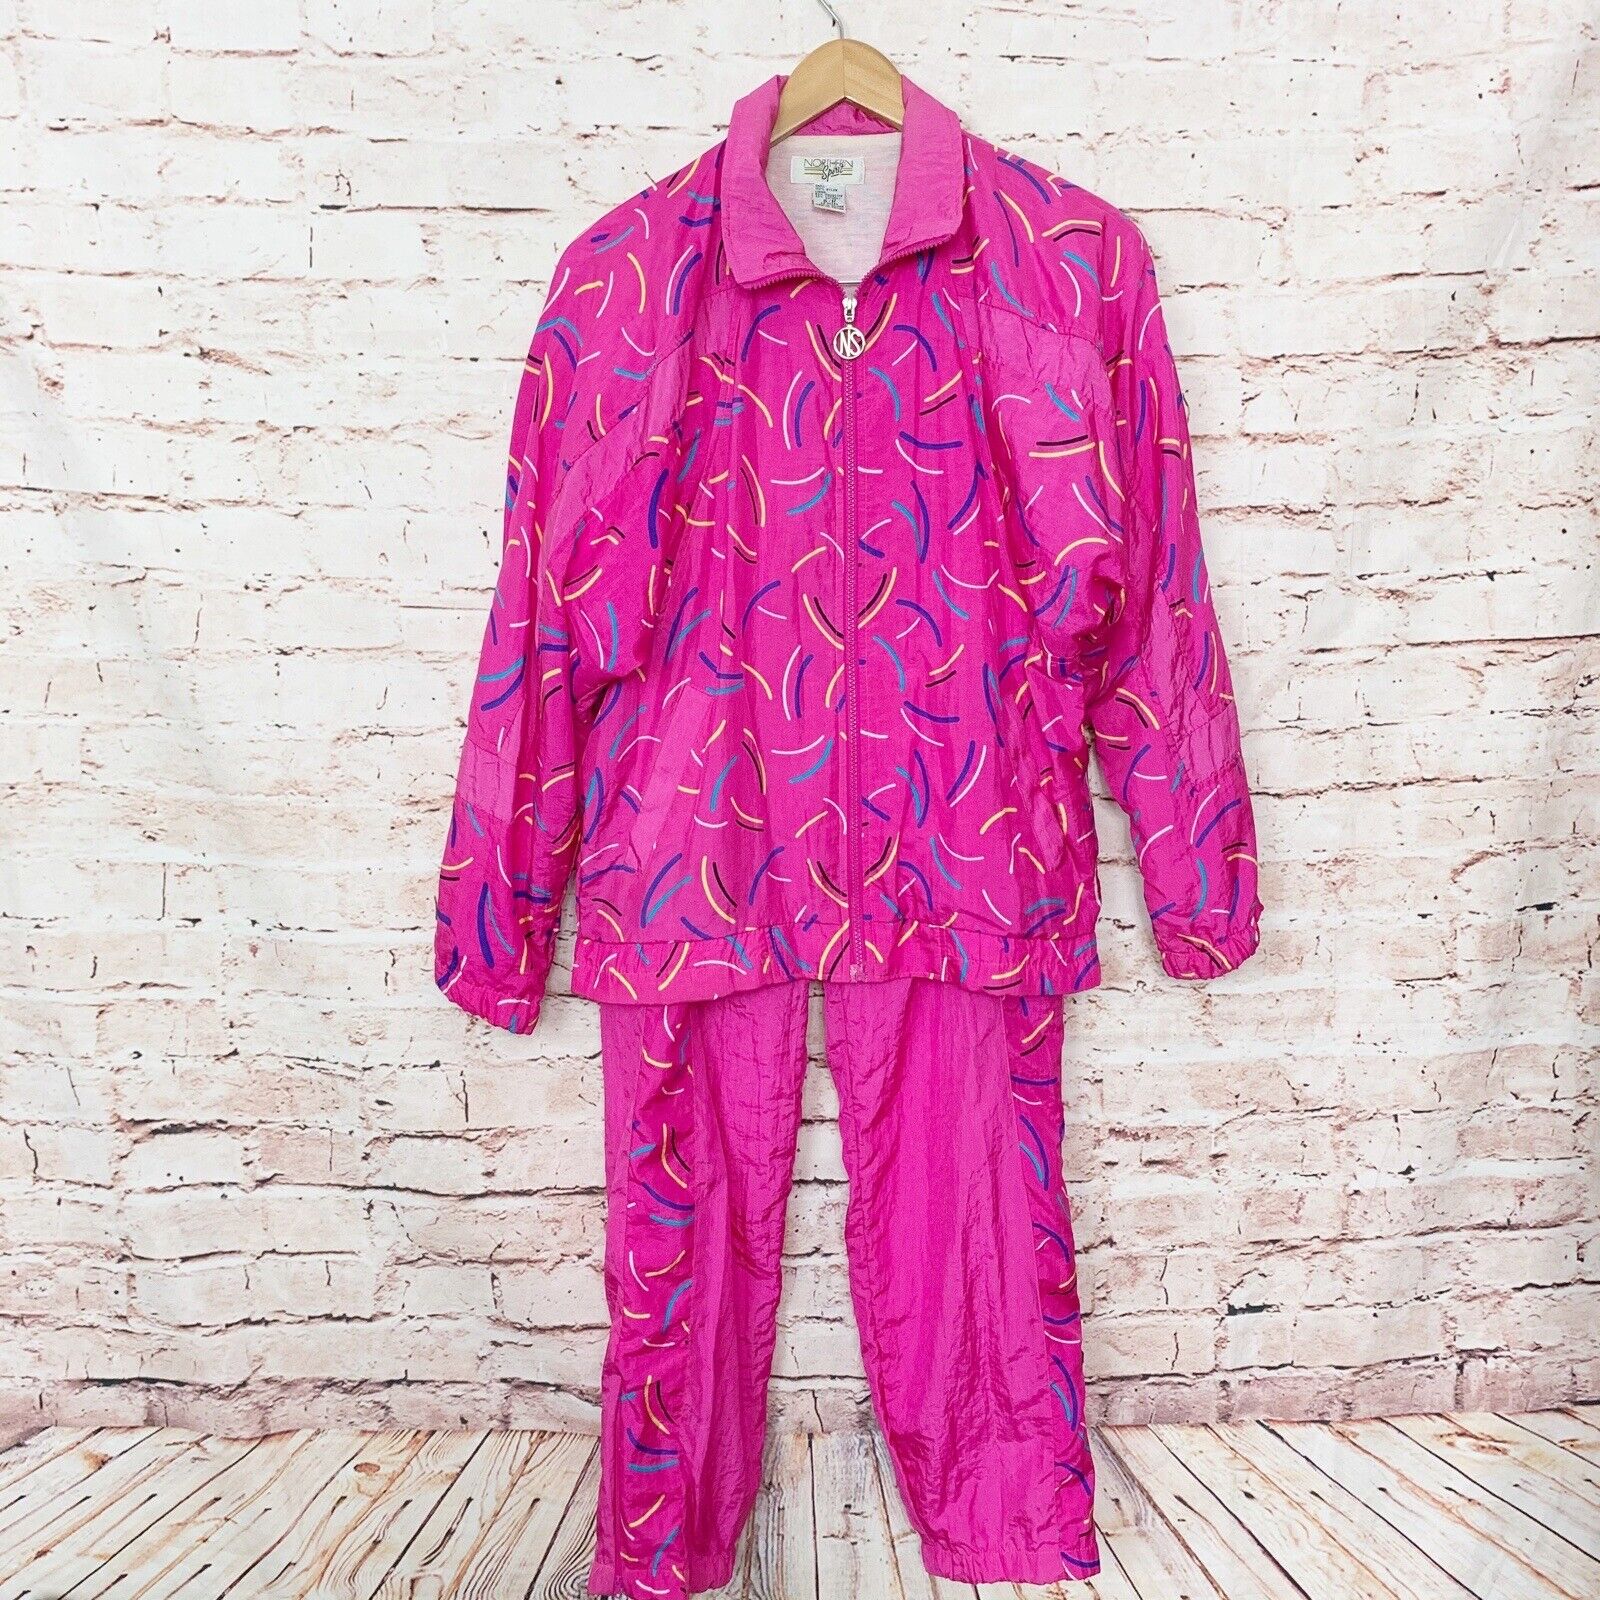 Vintage Dress  Retro Dress  90s 1990s  1980s 80s  Purple Pink  Small S Medium M